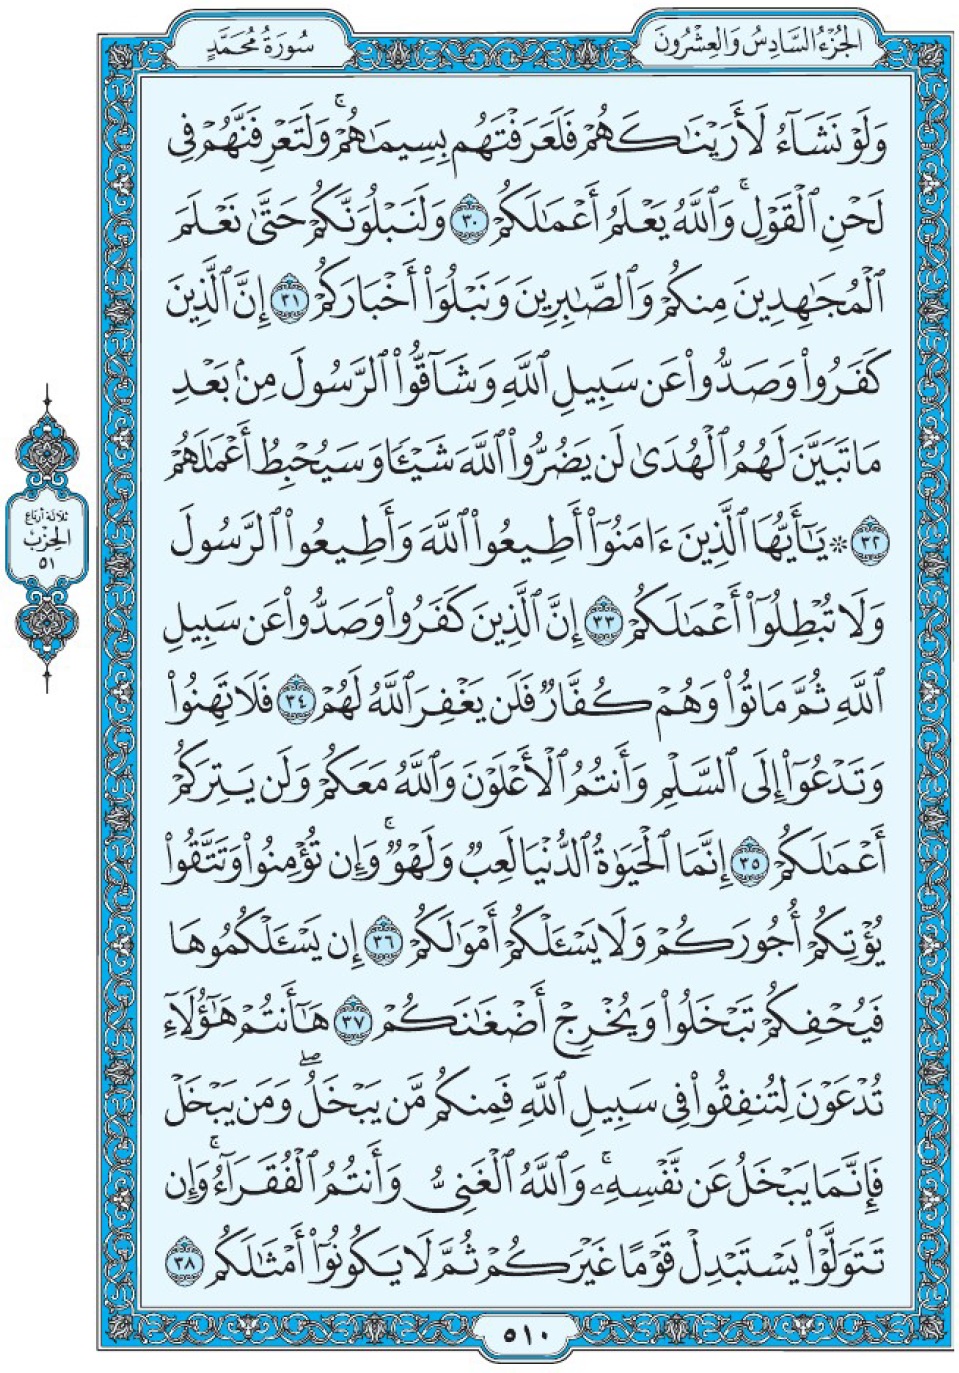 Коран Мединский мусхаф страница 510, Мухаммад, аят 30-38